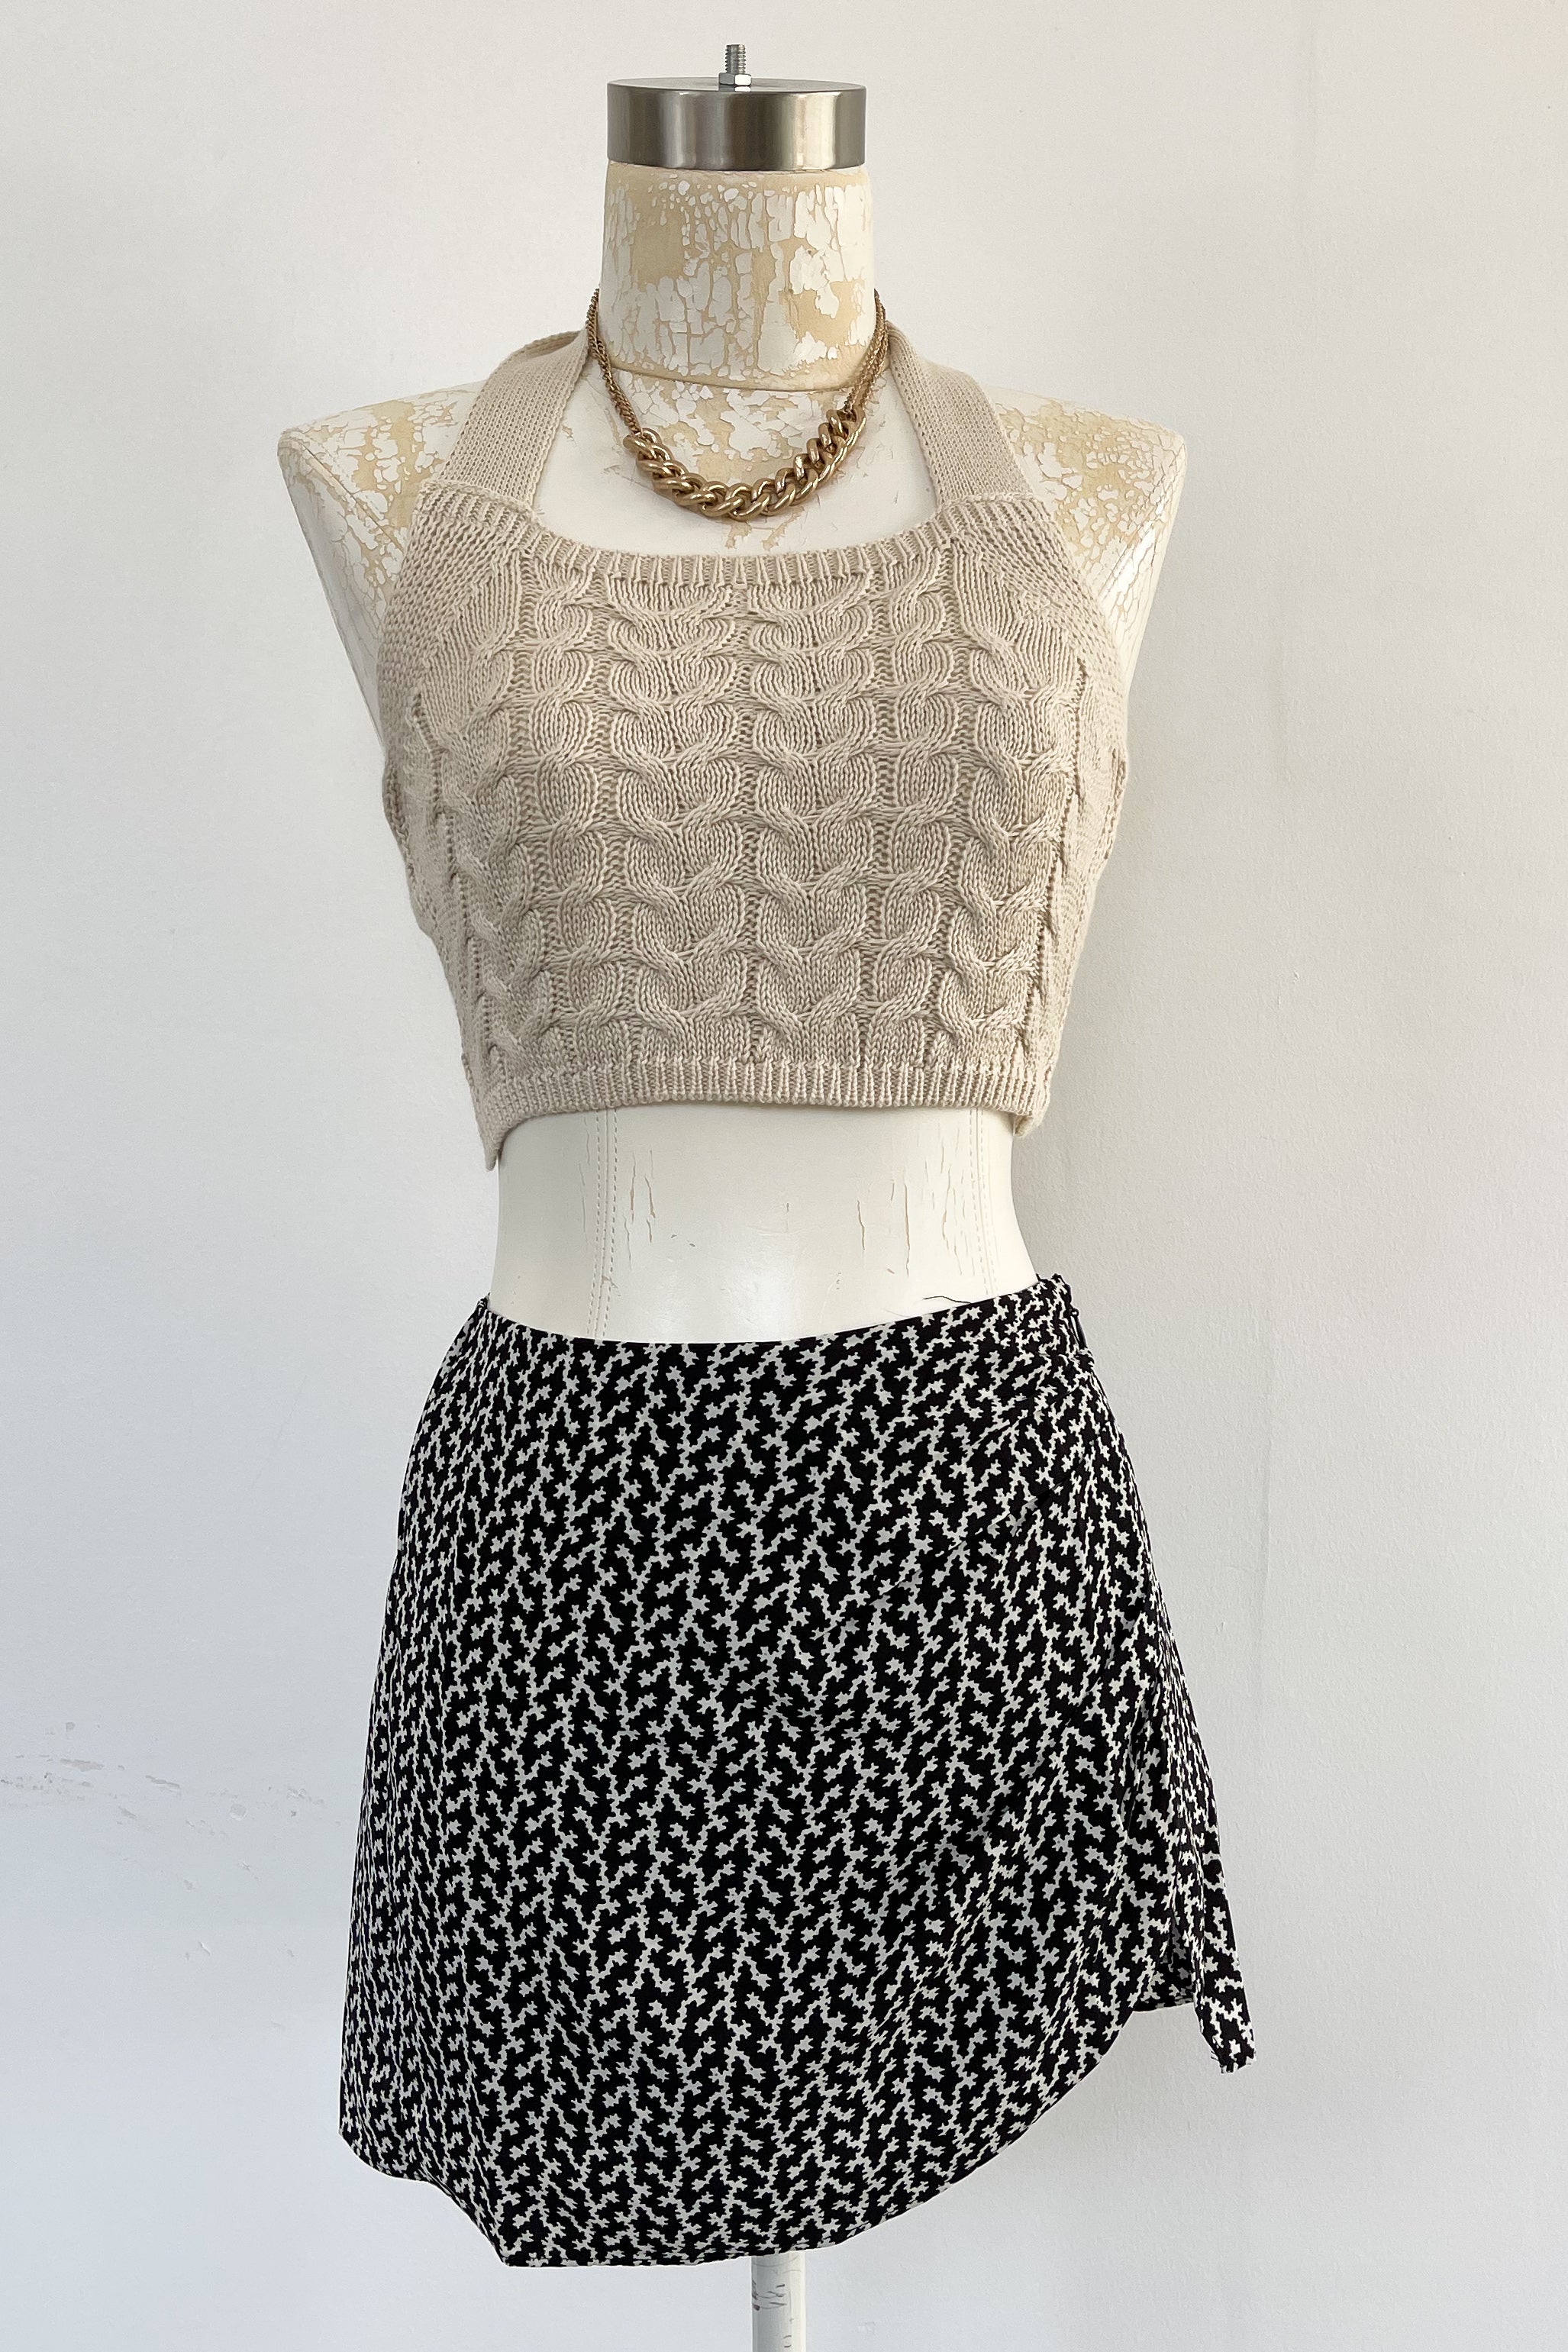 Candace Skirt-Black + White